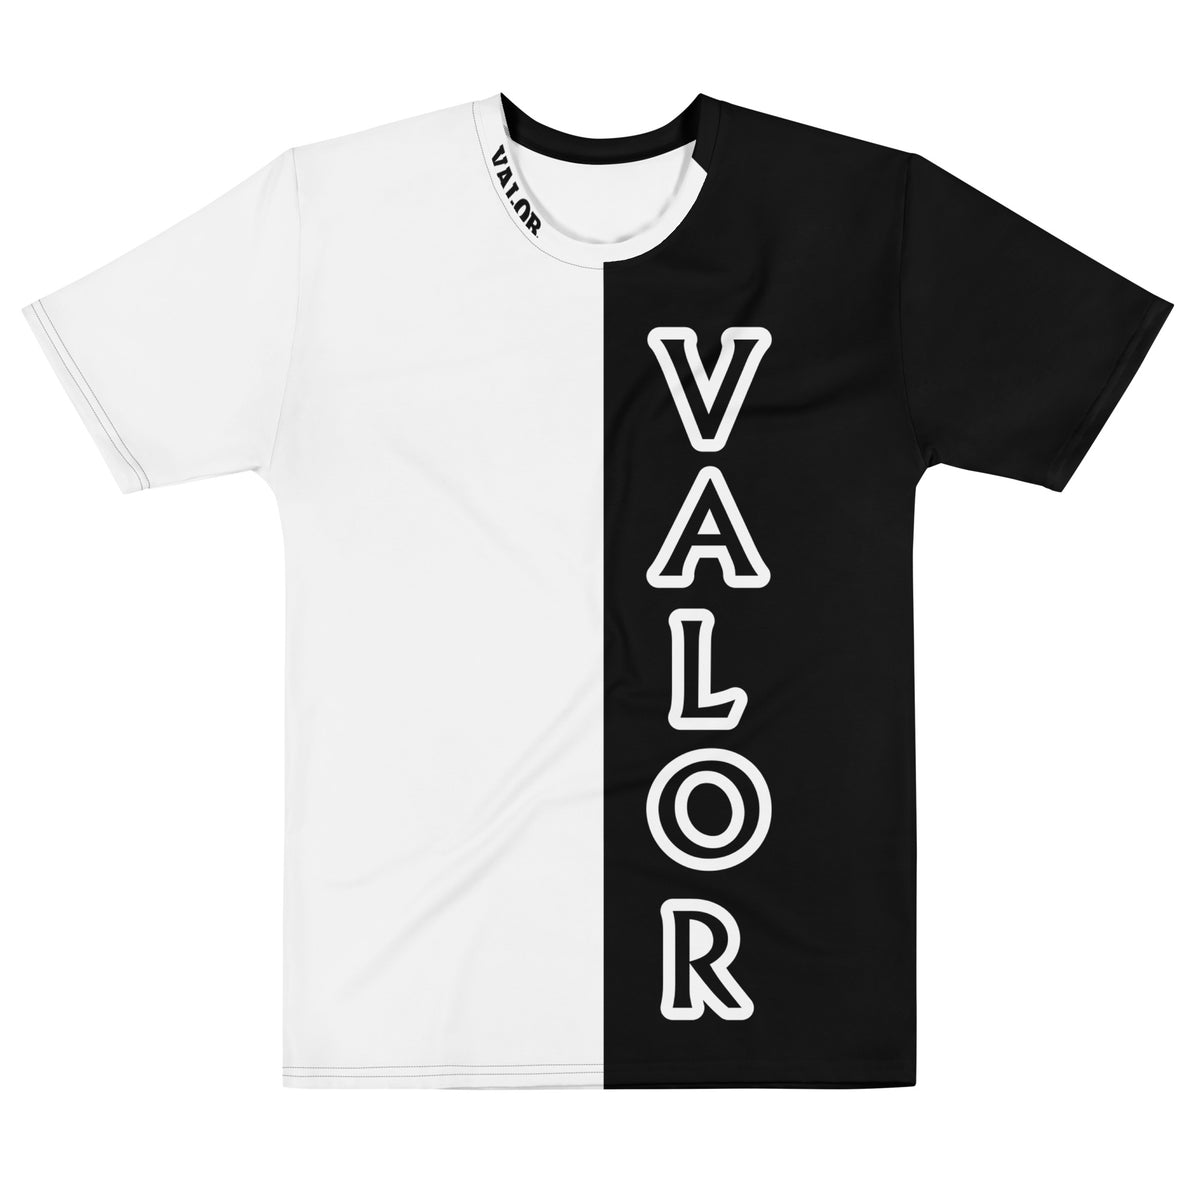 The VALOR Shirt, Black, Men's Fit